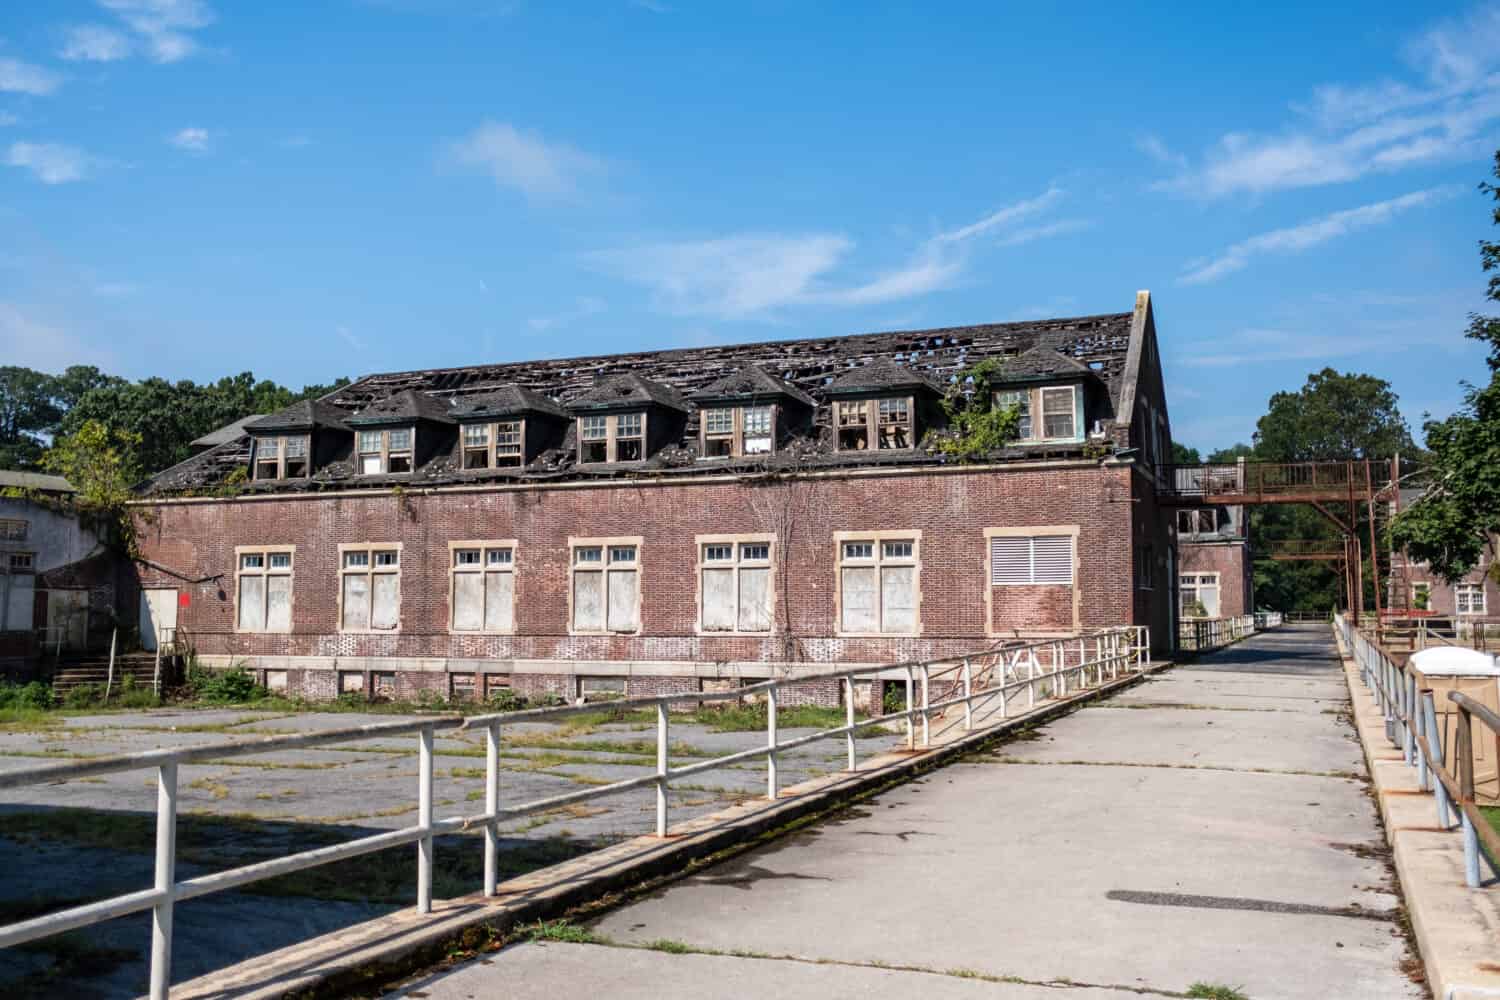 Buildings and walkways at Pennhurst Asylum, Pennsylvania